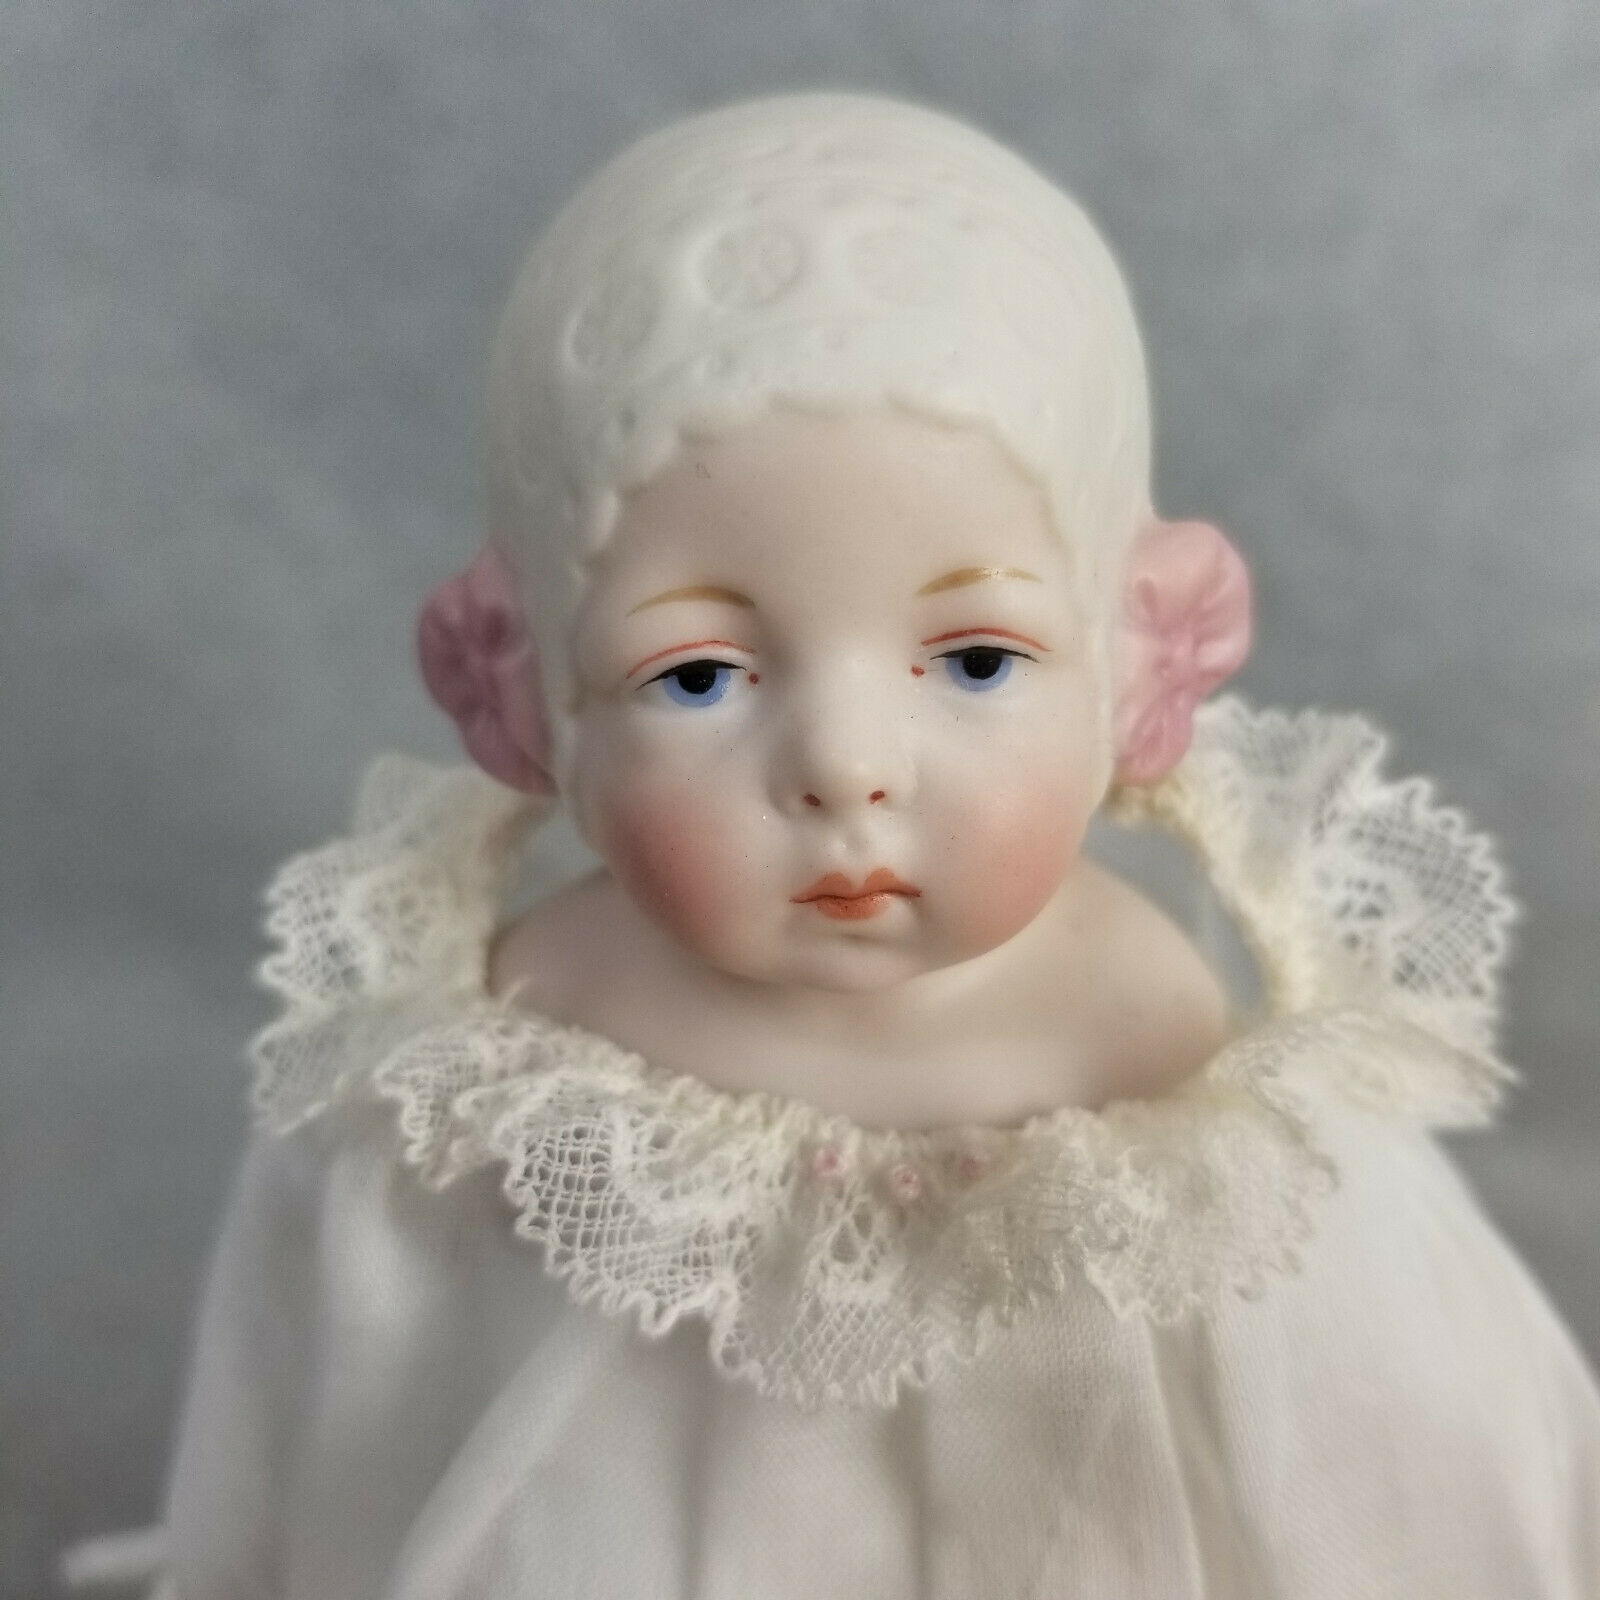 Antique Reproduction German Bisque Molded Bonnet Doll Artist Darlene Lane Ufdc